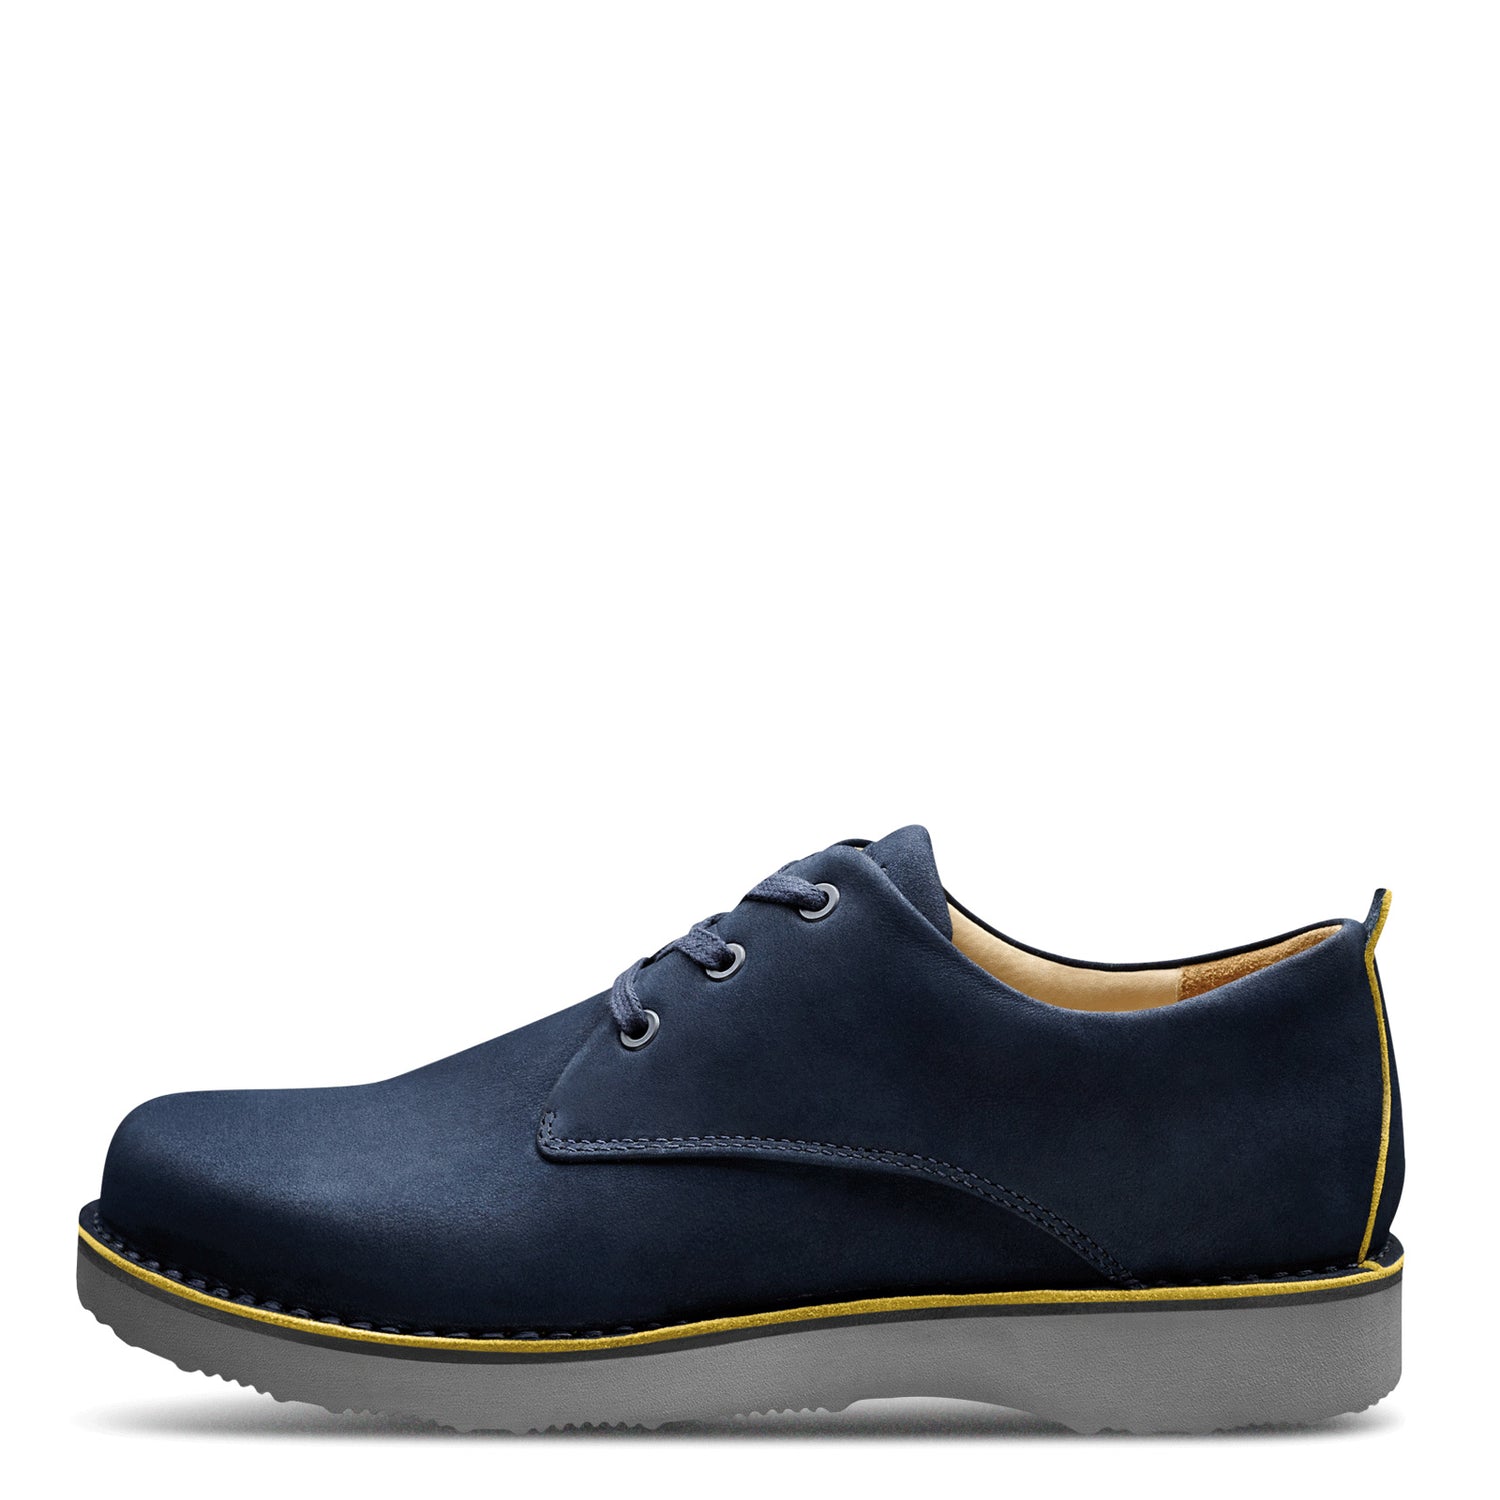 Peltz Shoes  Men's Samuel Hubbard Hubbard Free Oxford NAVY NUBUCK M1100-016